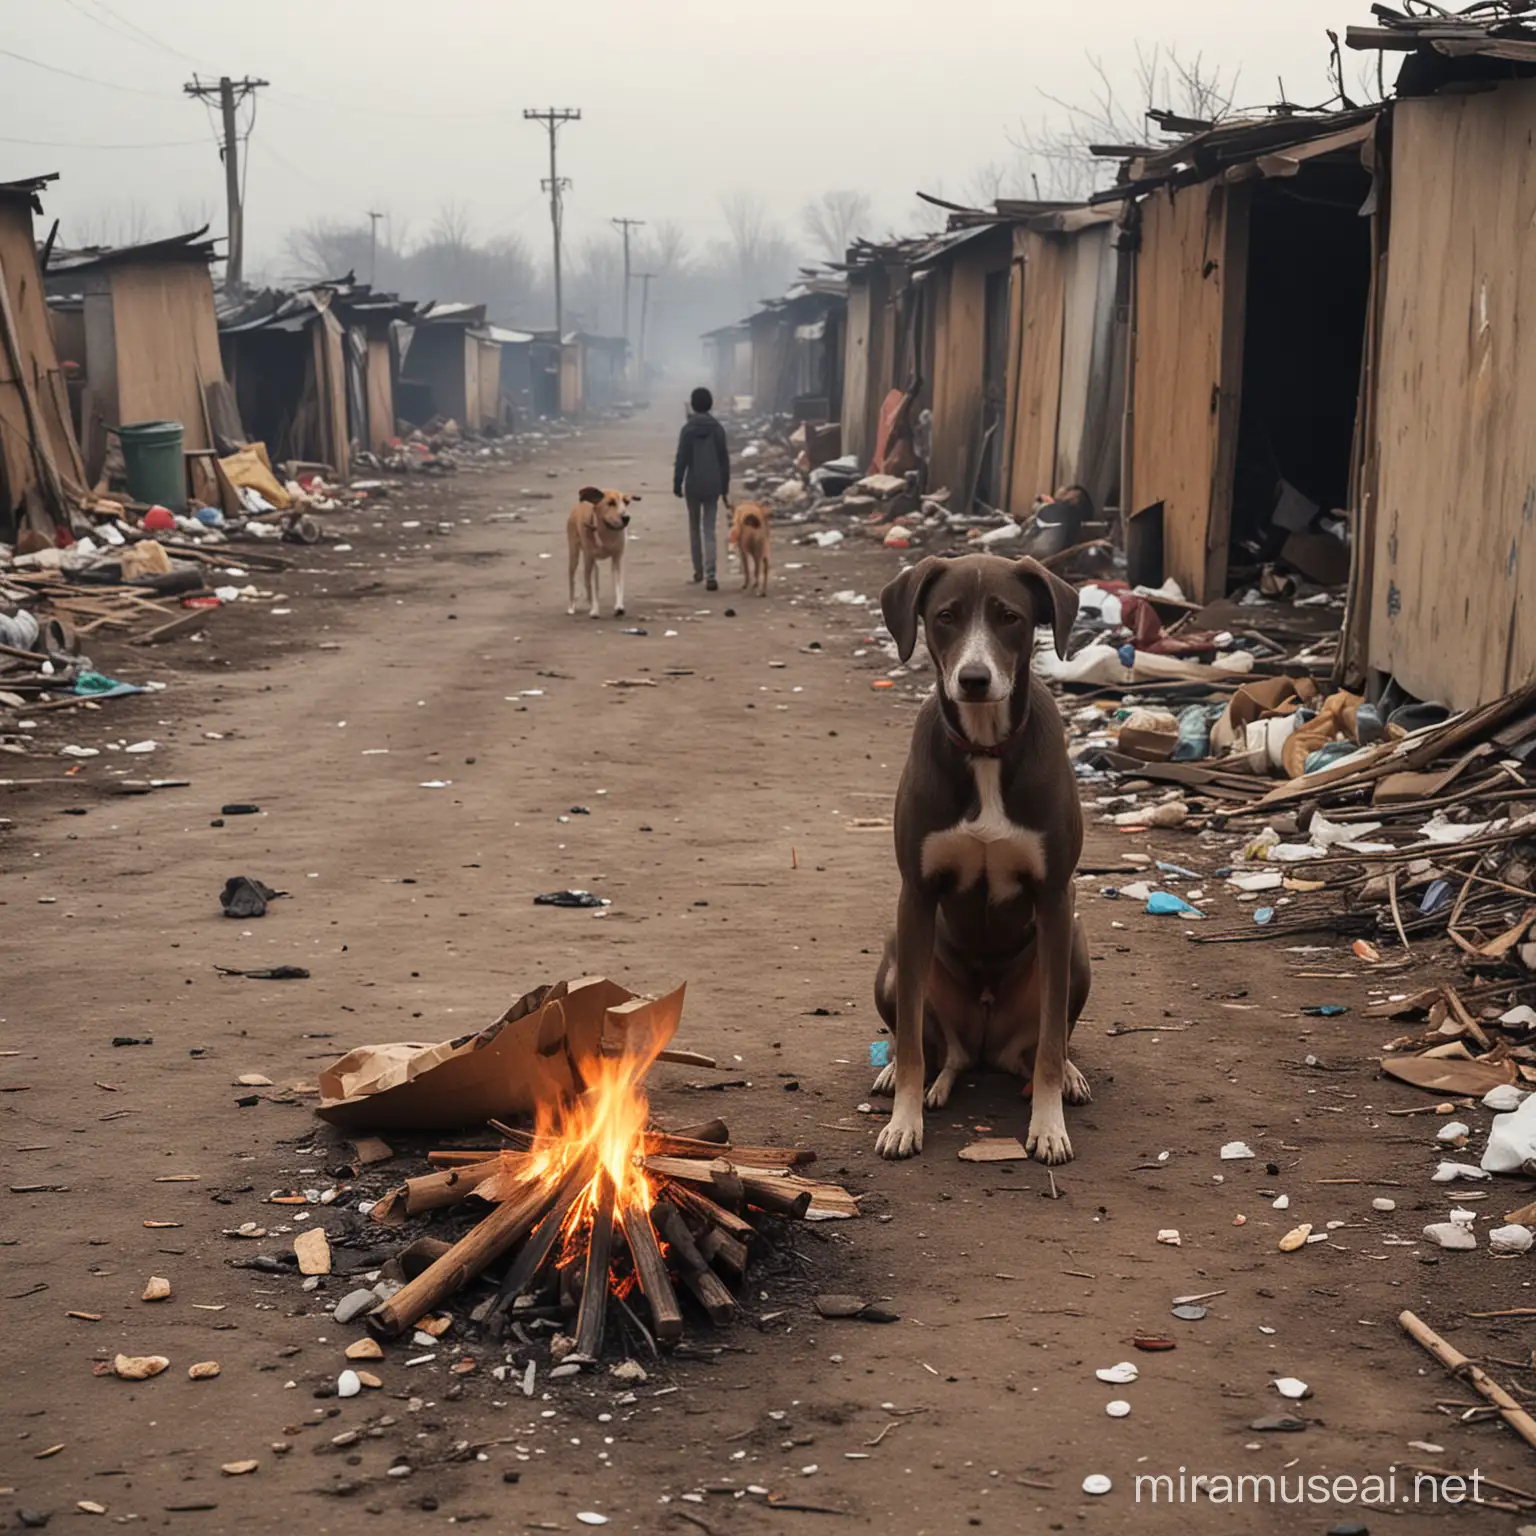 Impoverished Children Gathered around a Bonfire in a Sad Neighborhood